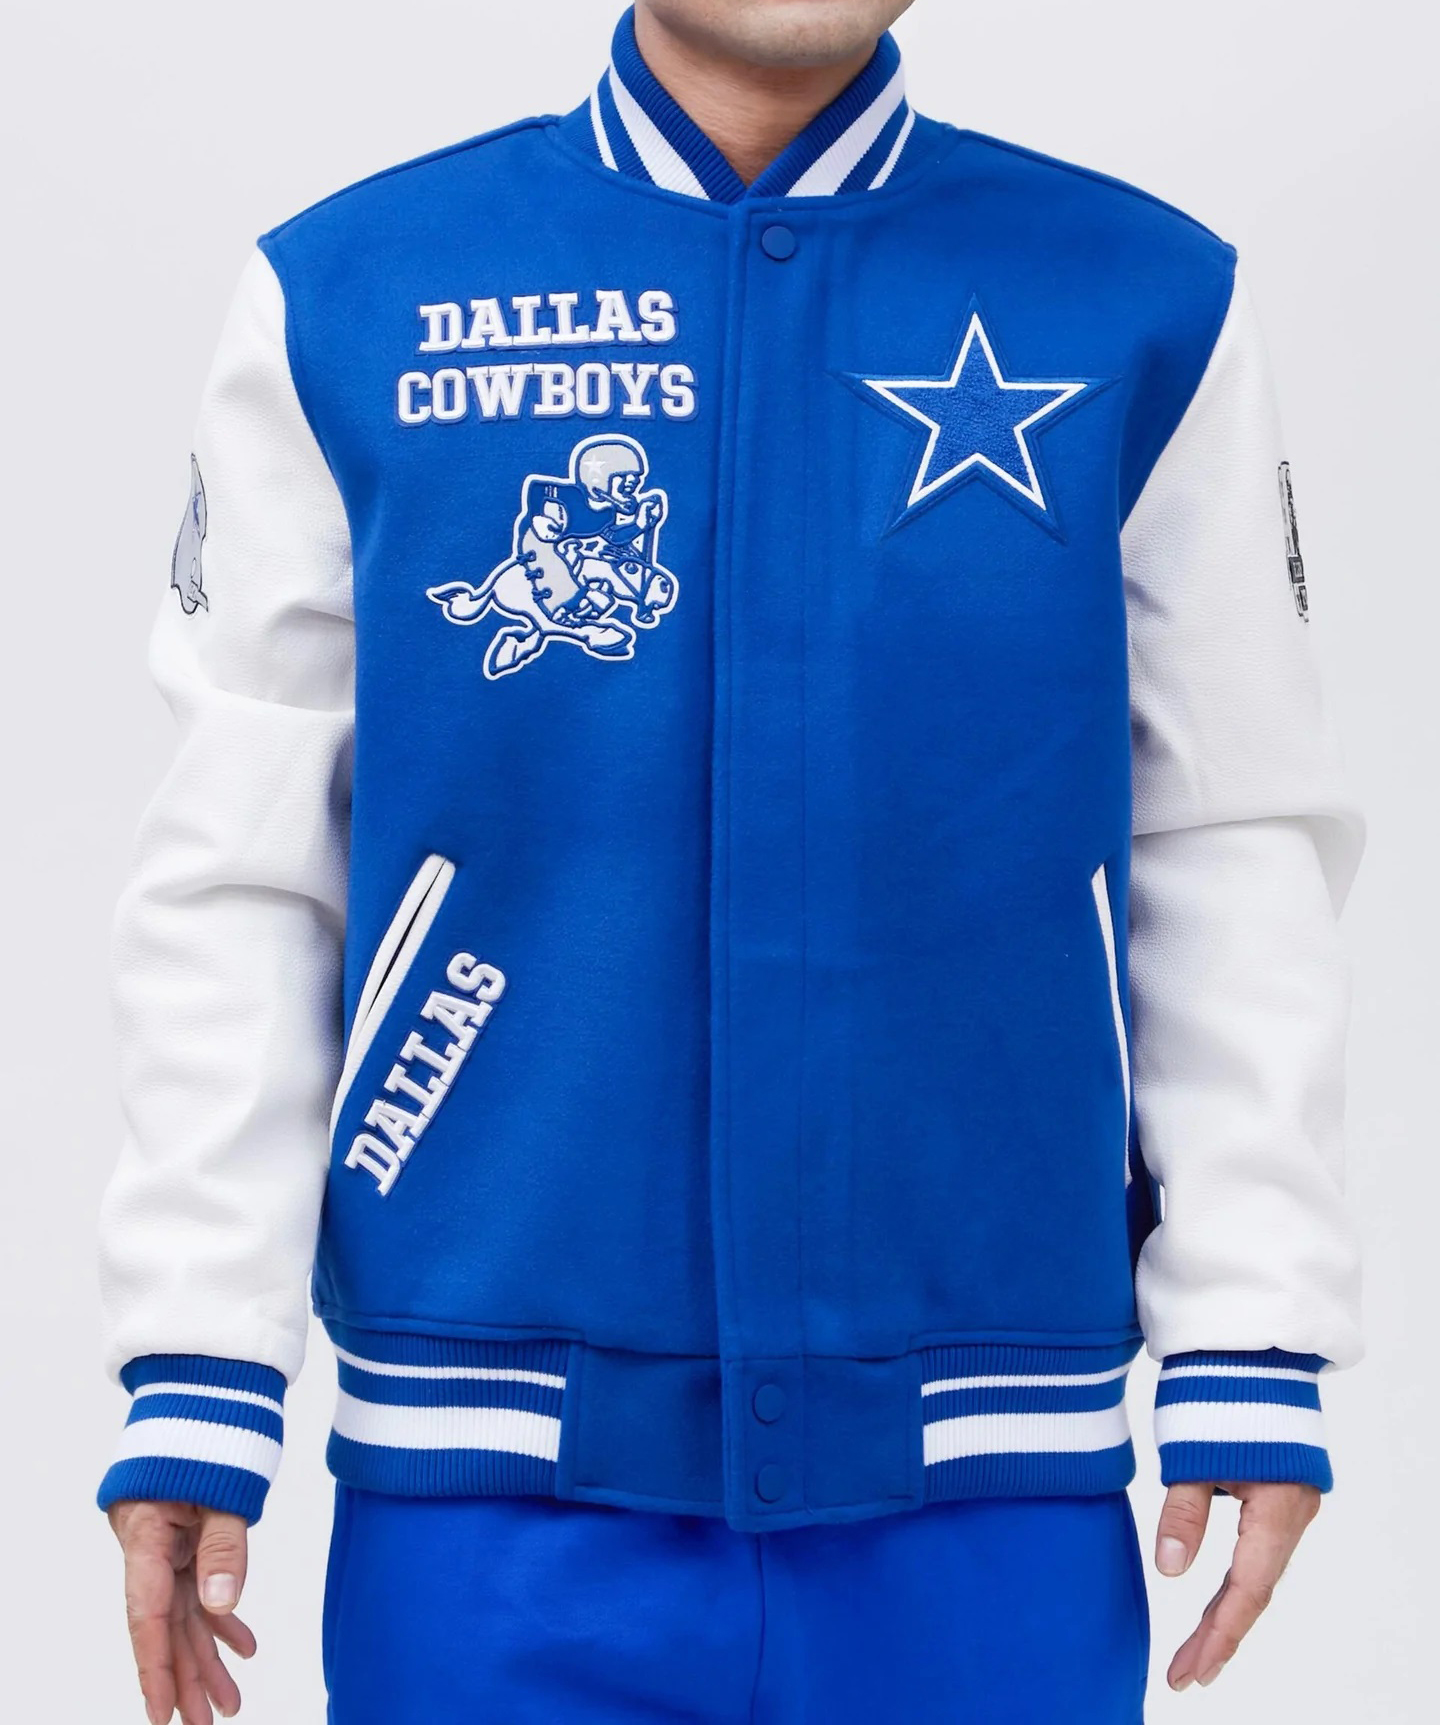 Dallas Cowboys Women's Varsity Jacket Dresses Snap Button Coat